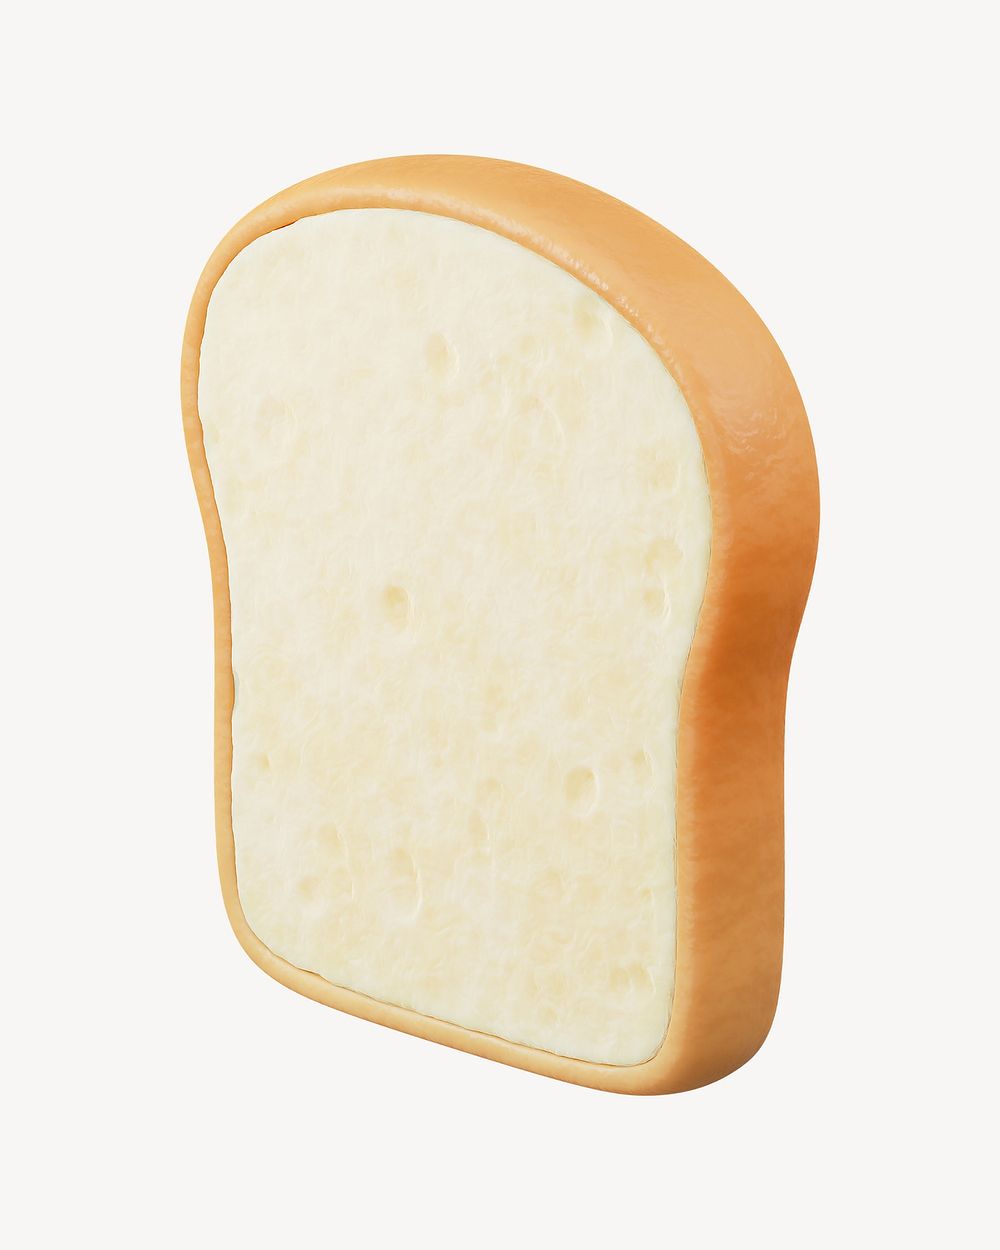 3D bread slice, element illustration